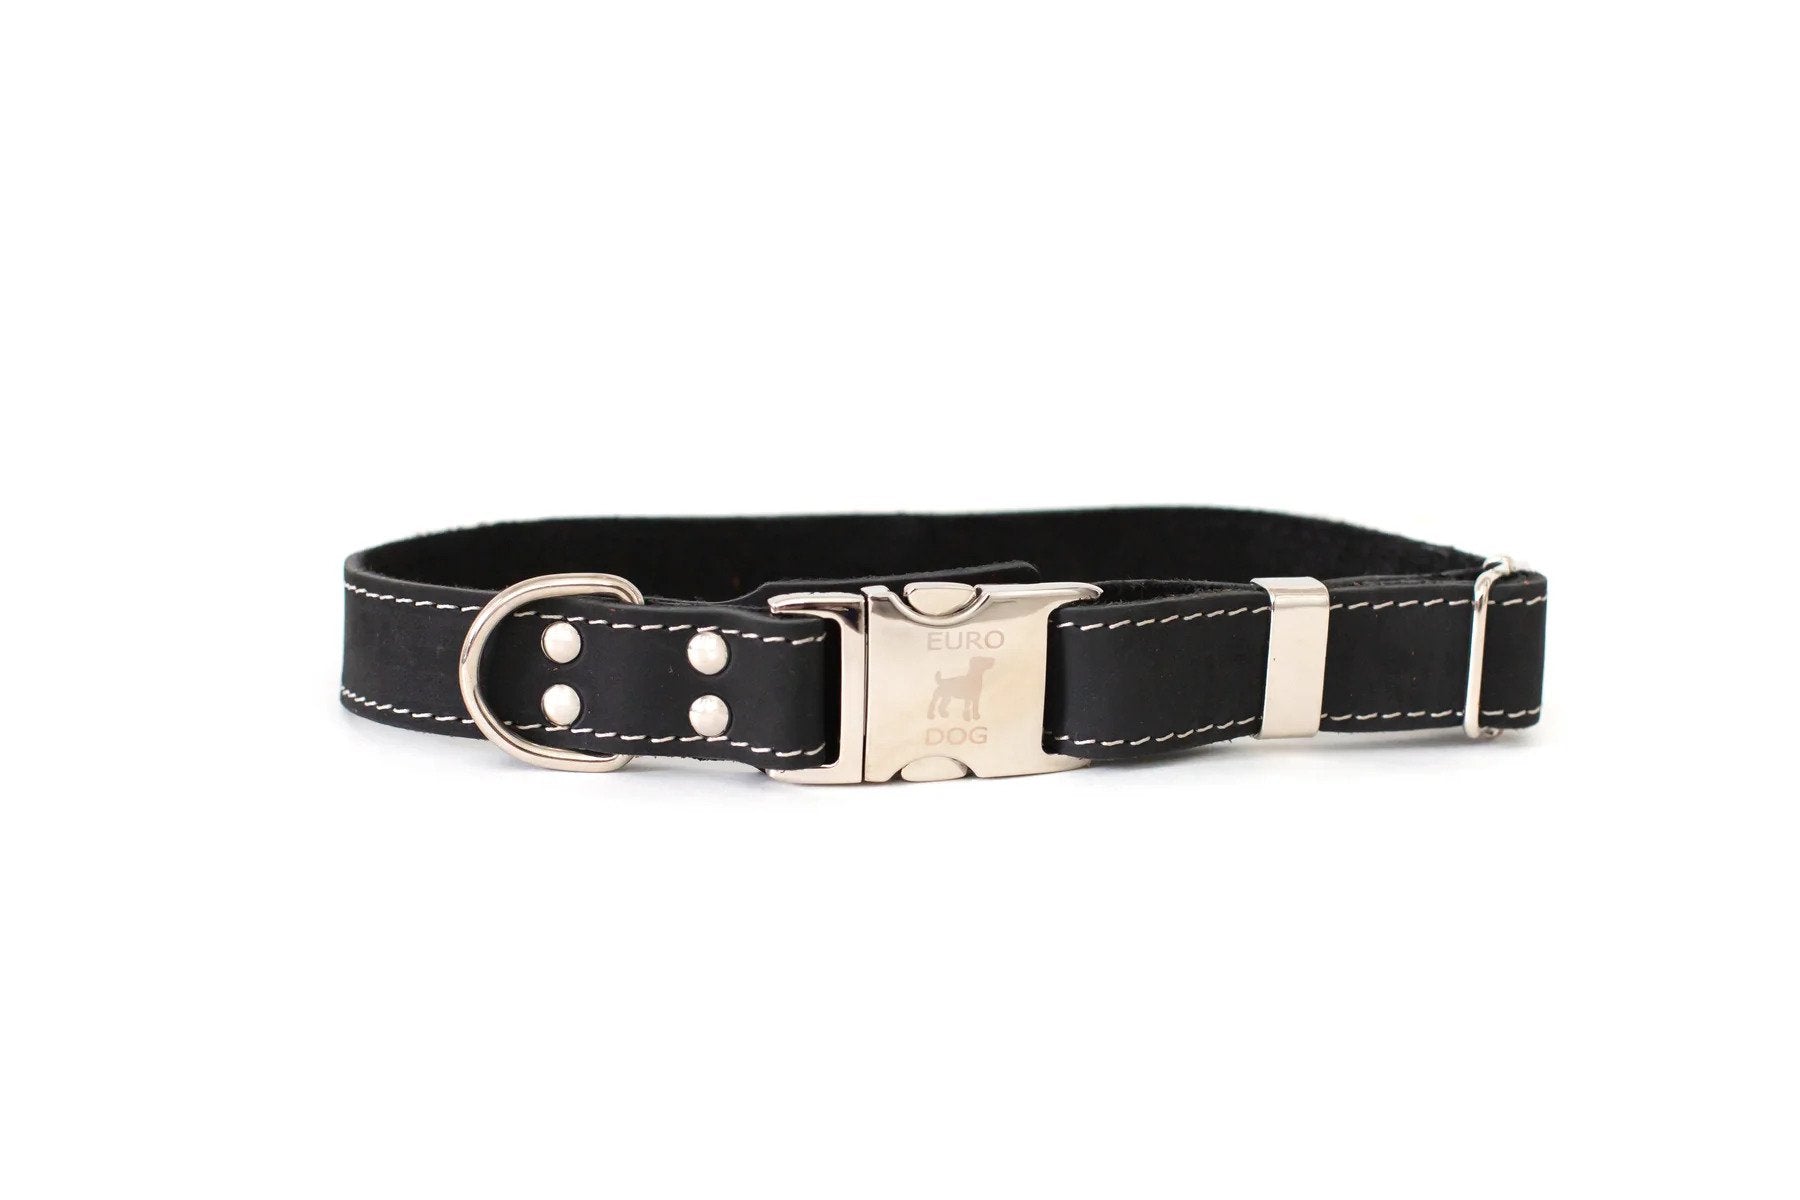 Eurodog Collars Soft Leather Metal Quick-Release Buckle Dog Collar Black